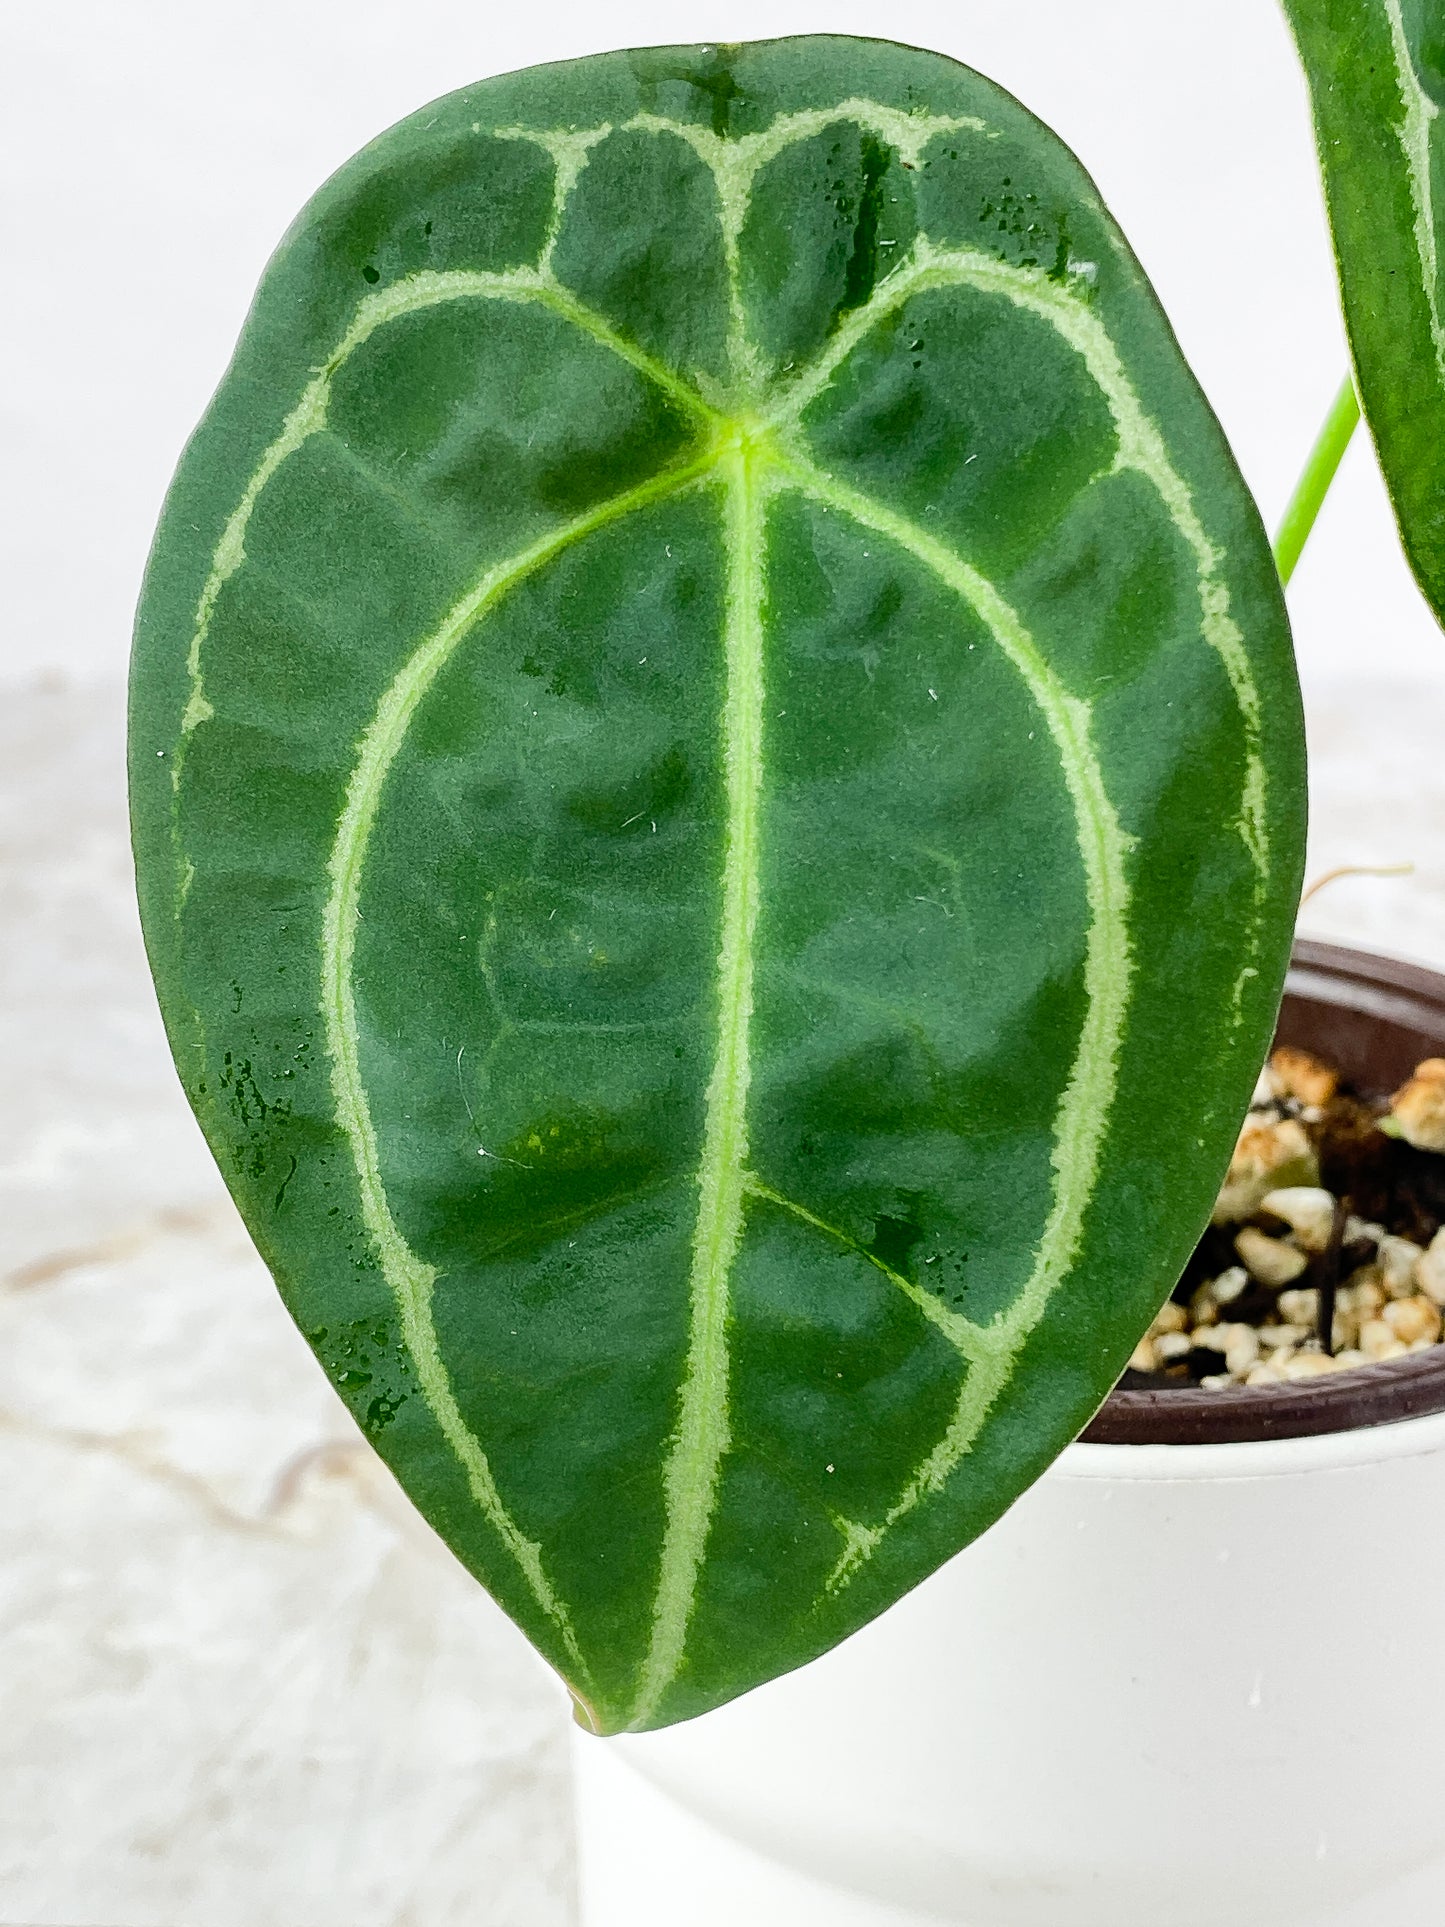 Anthurium Forgetii x crystallinum rooted 6" leaf